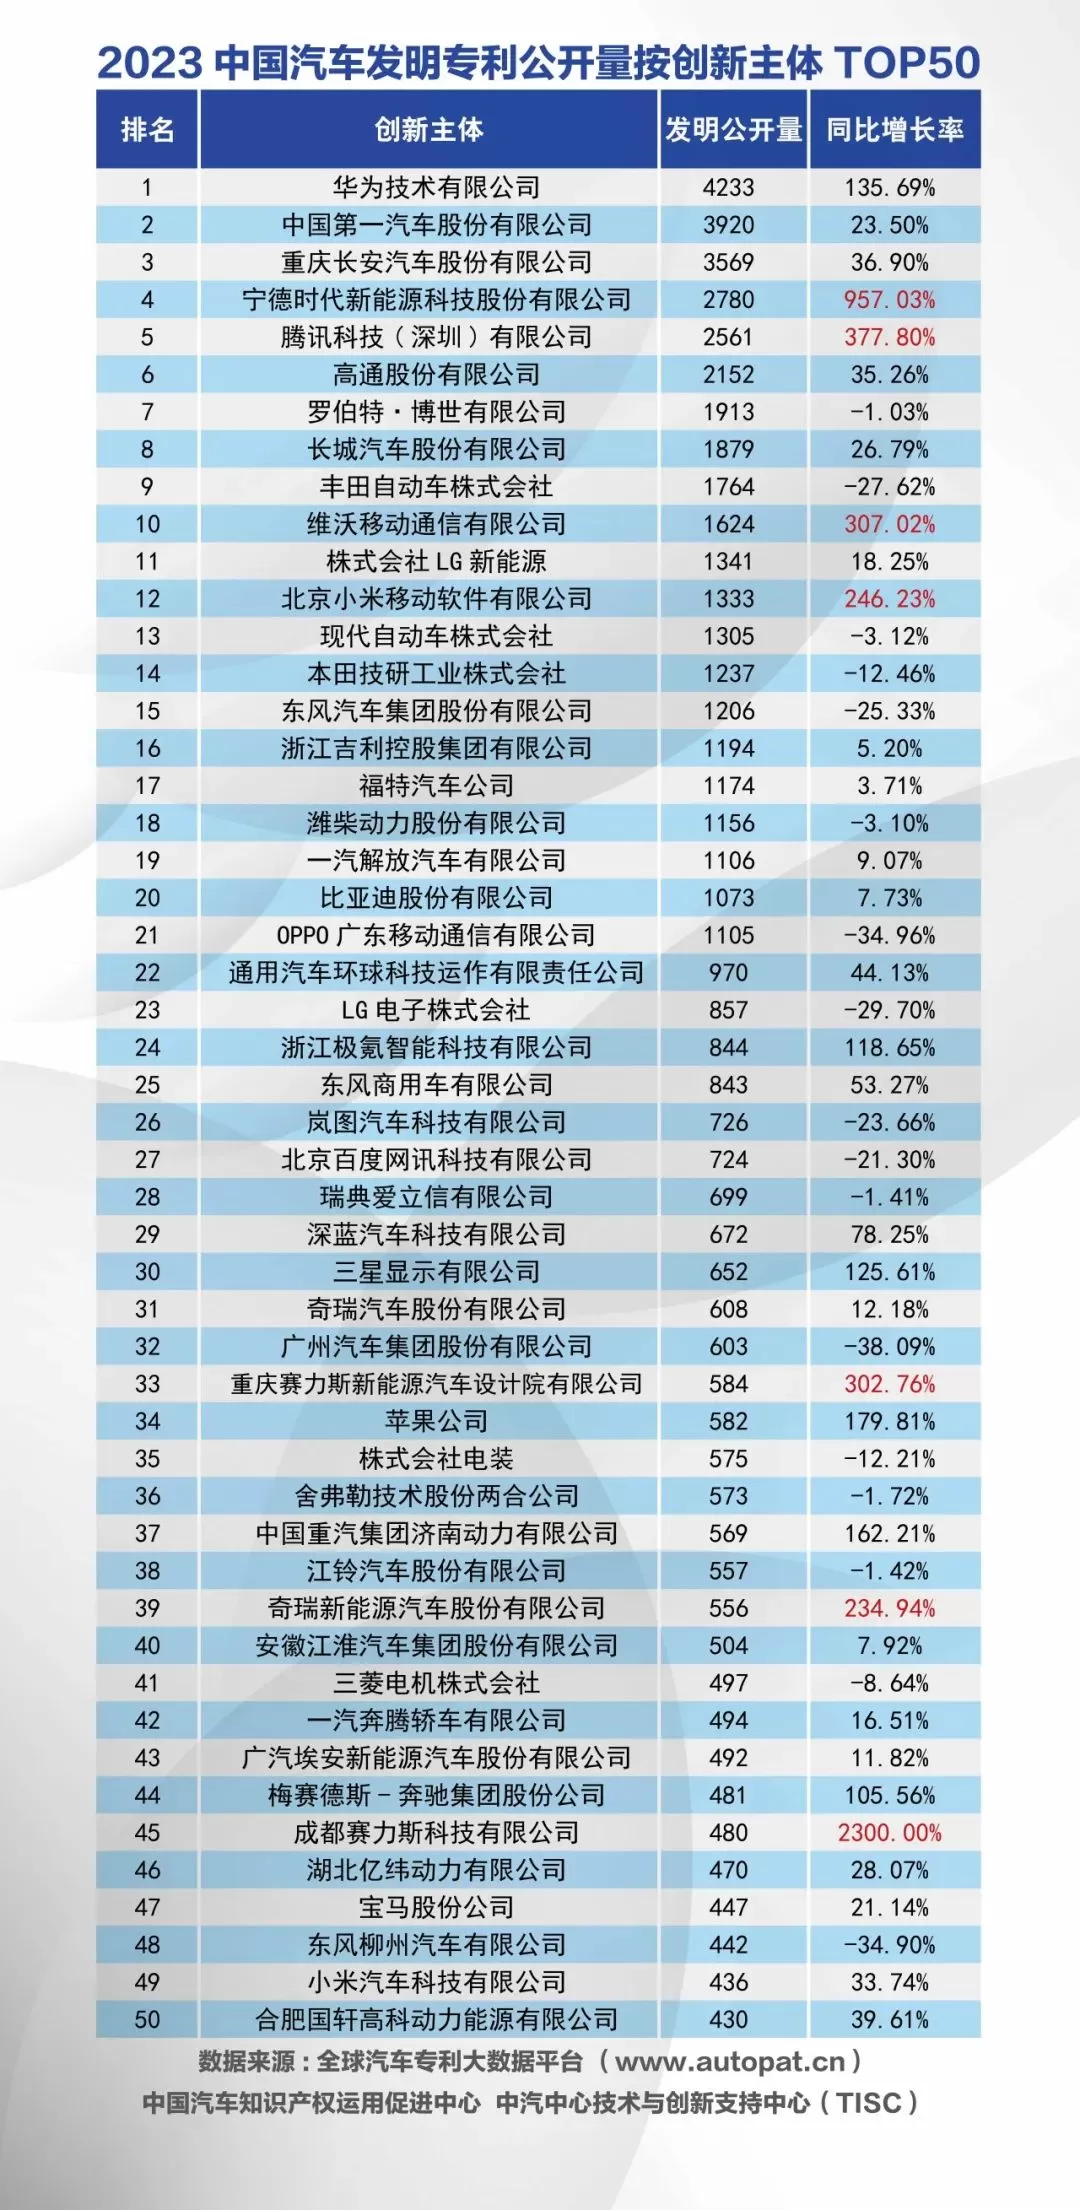 2023 Chinese Automotive Patent Data Analysis: Key Findings Revealed!